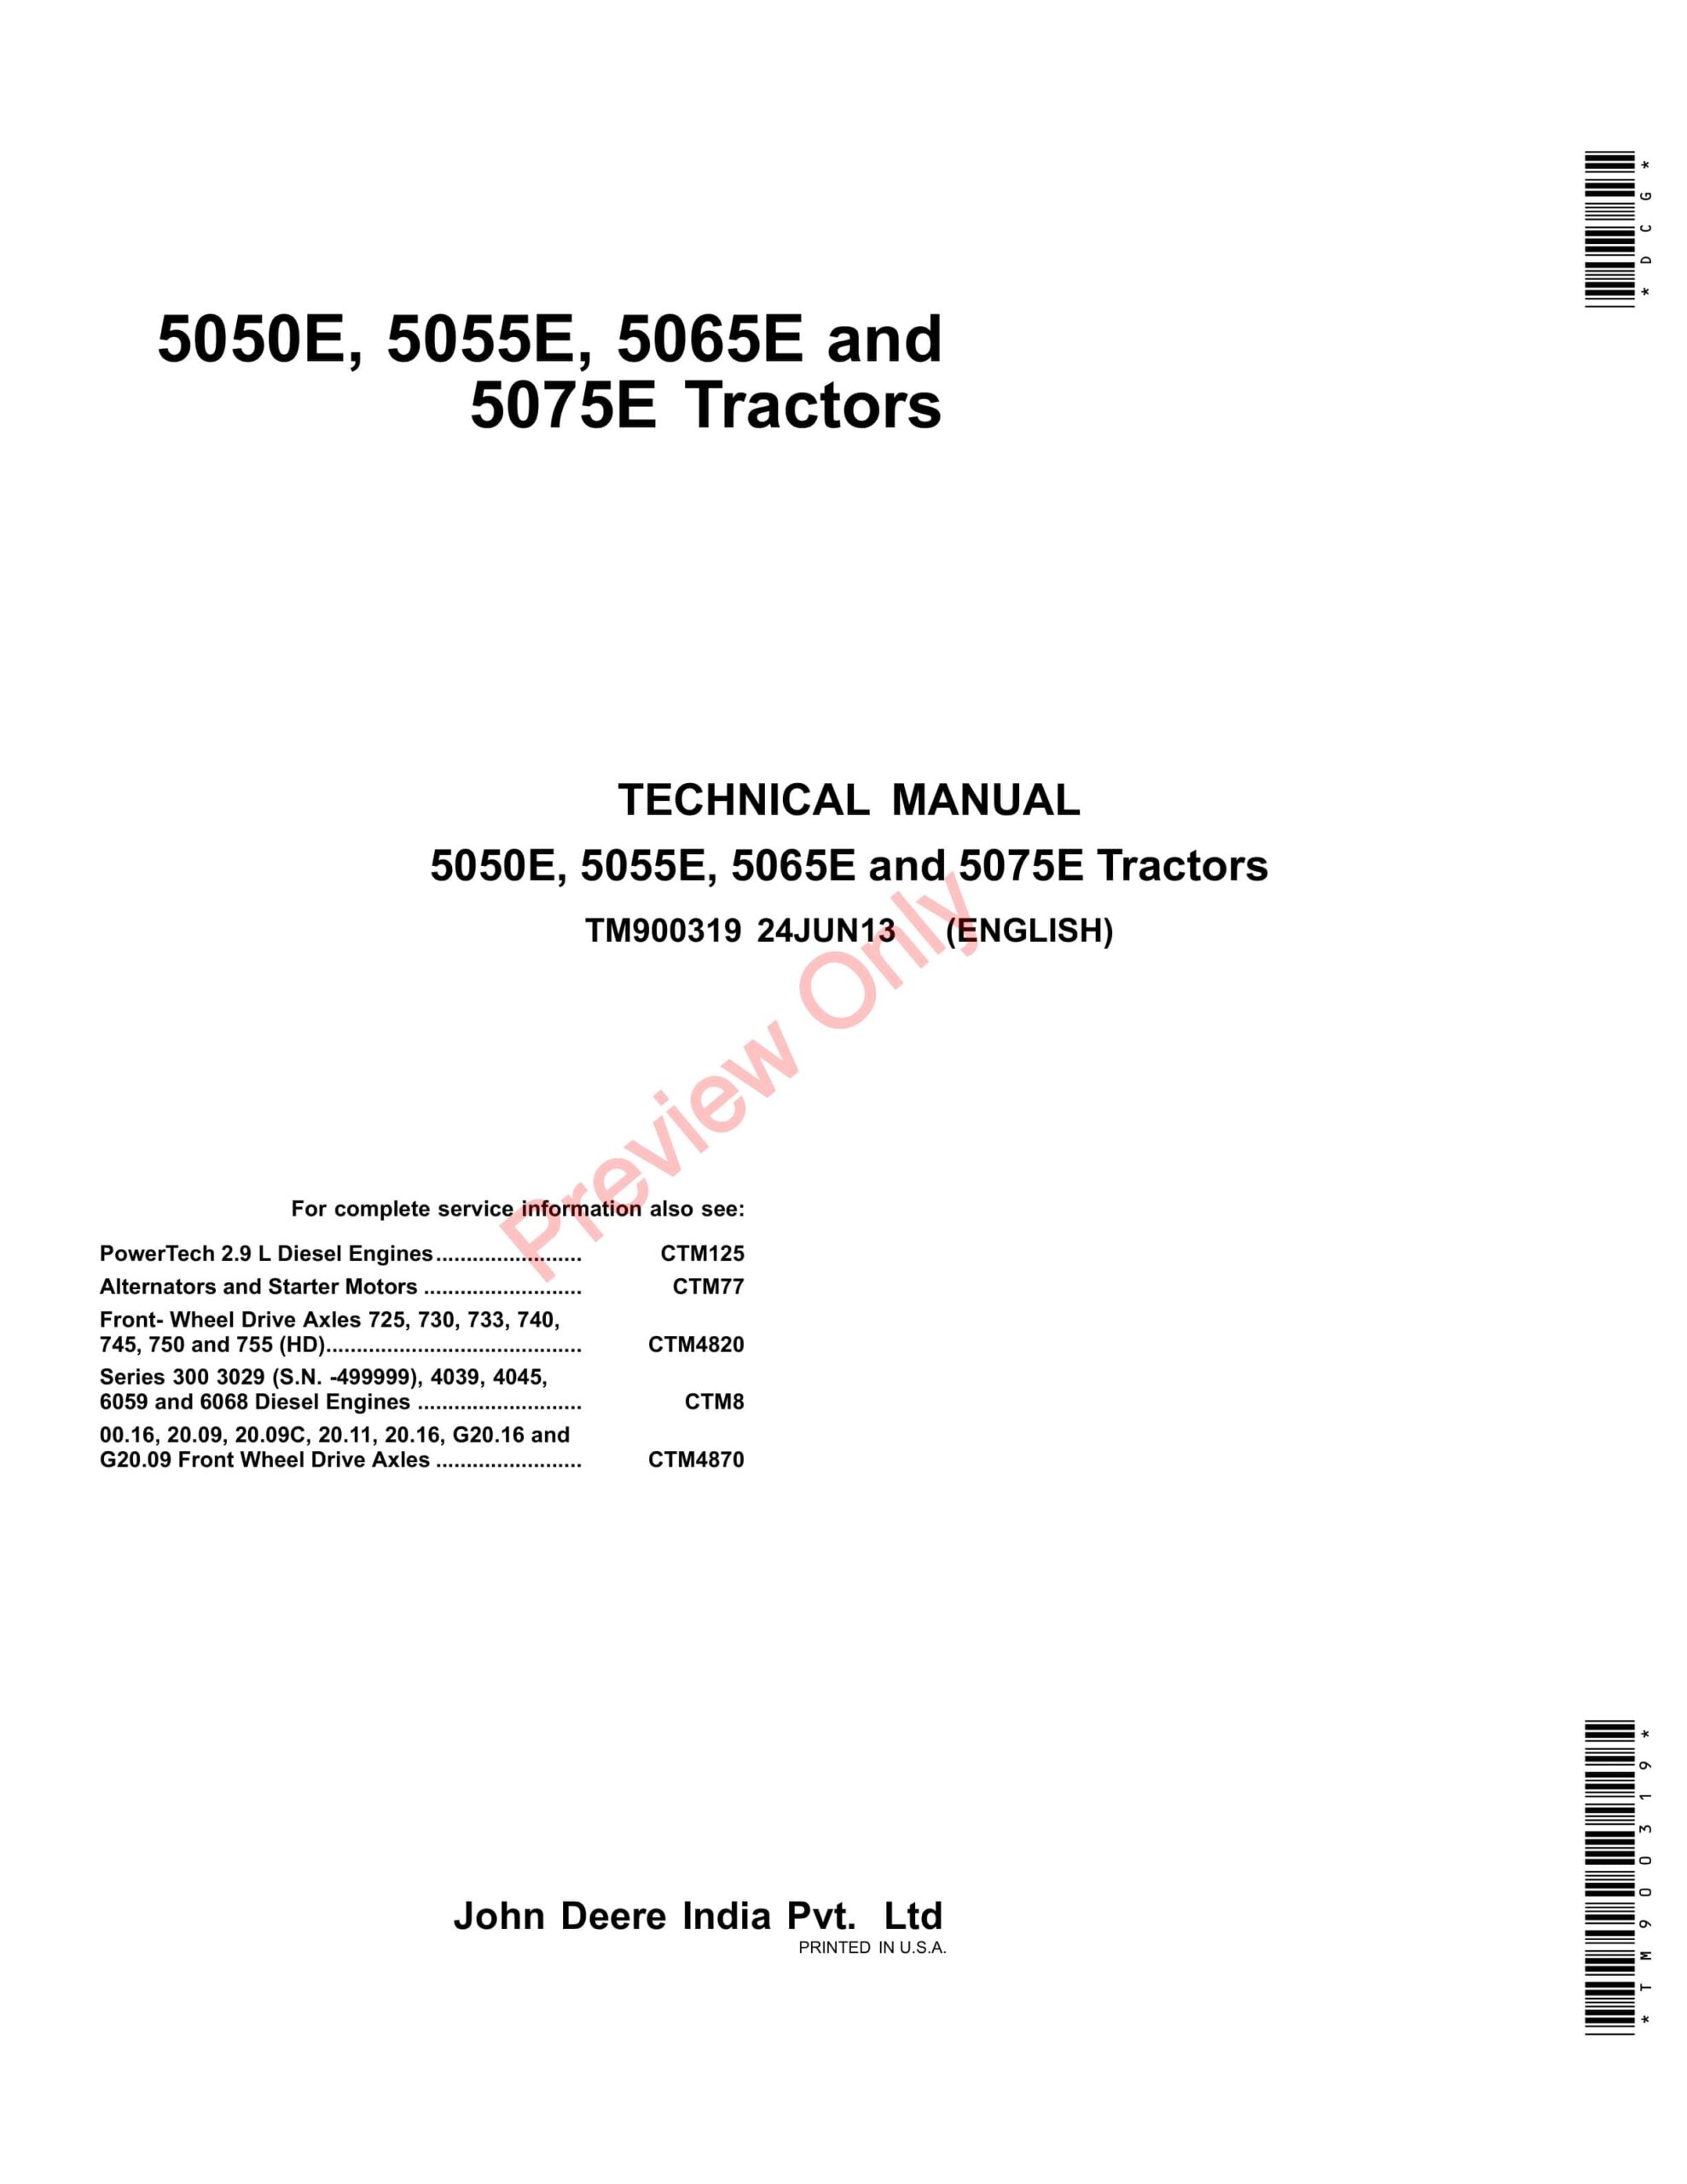 John Deere 5050E, 5055E, 5065E and 5075E Tractors Technical Manual TM900319 24JUN13-1